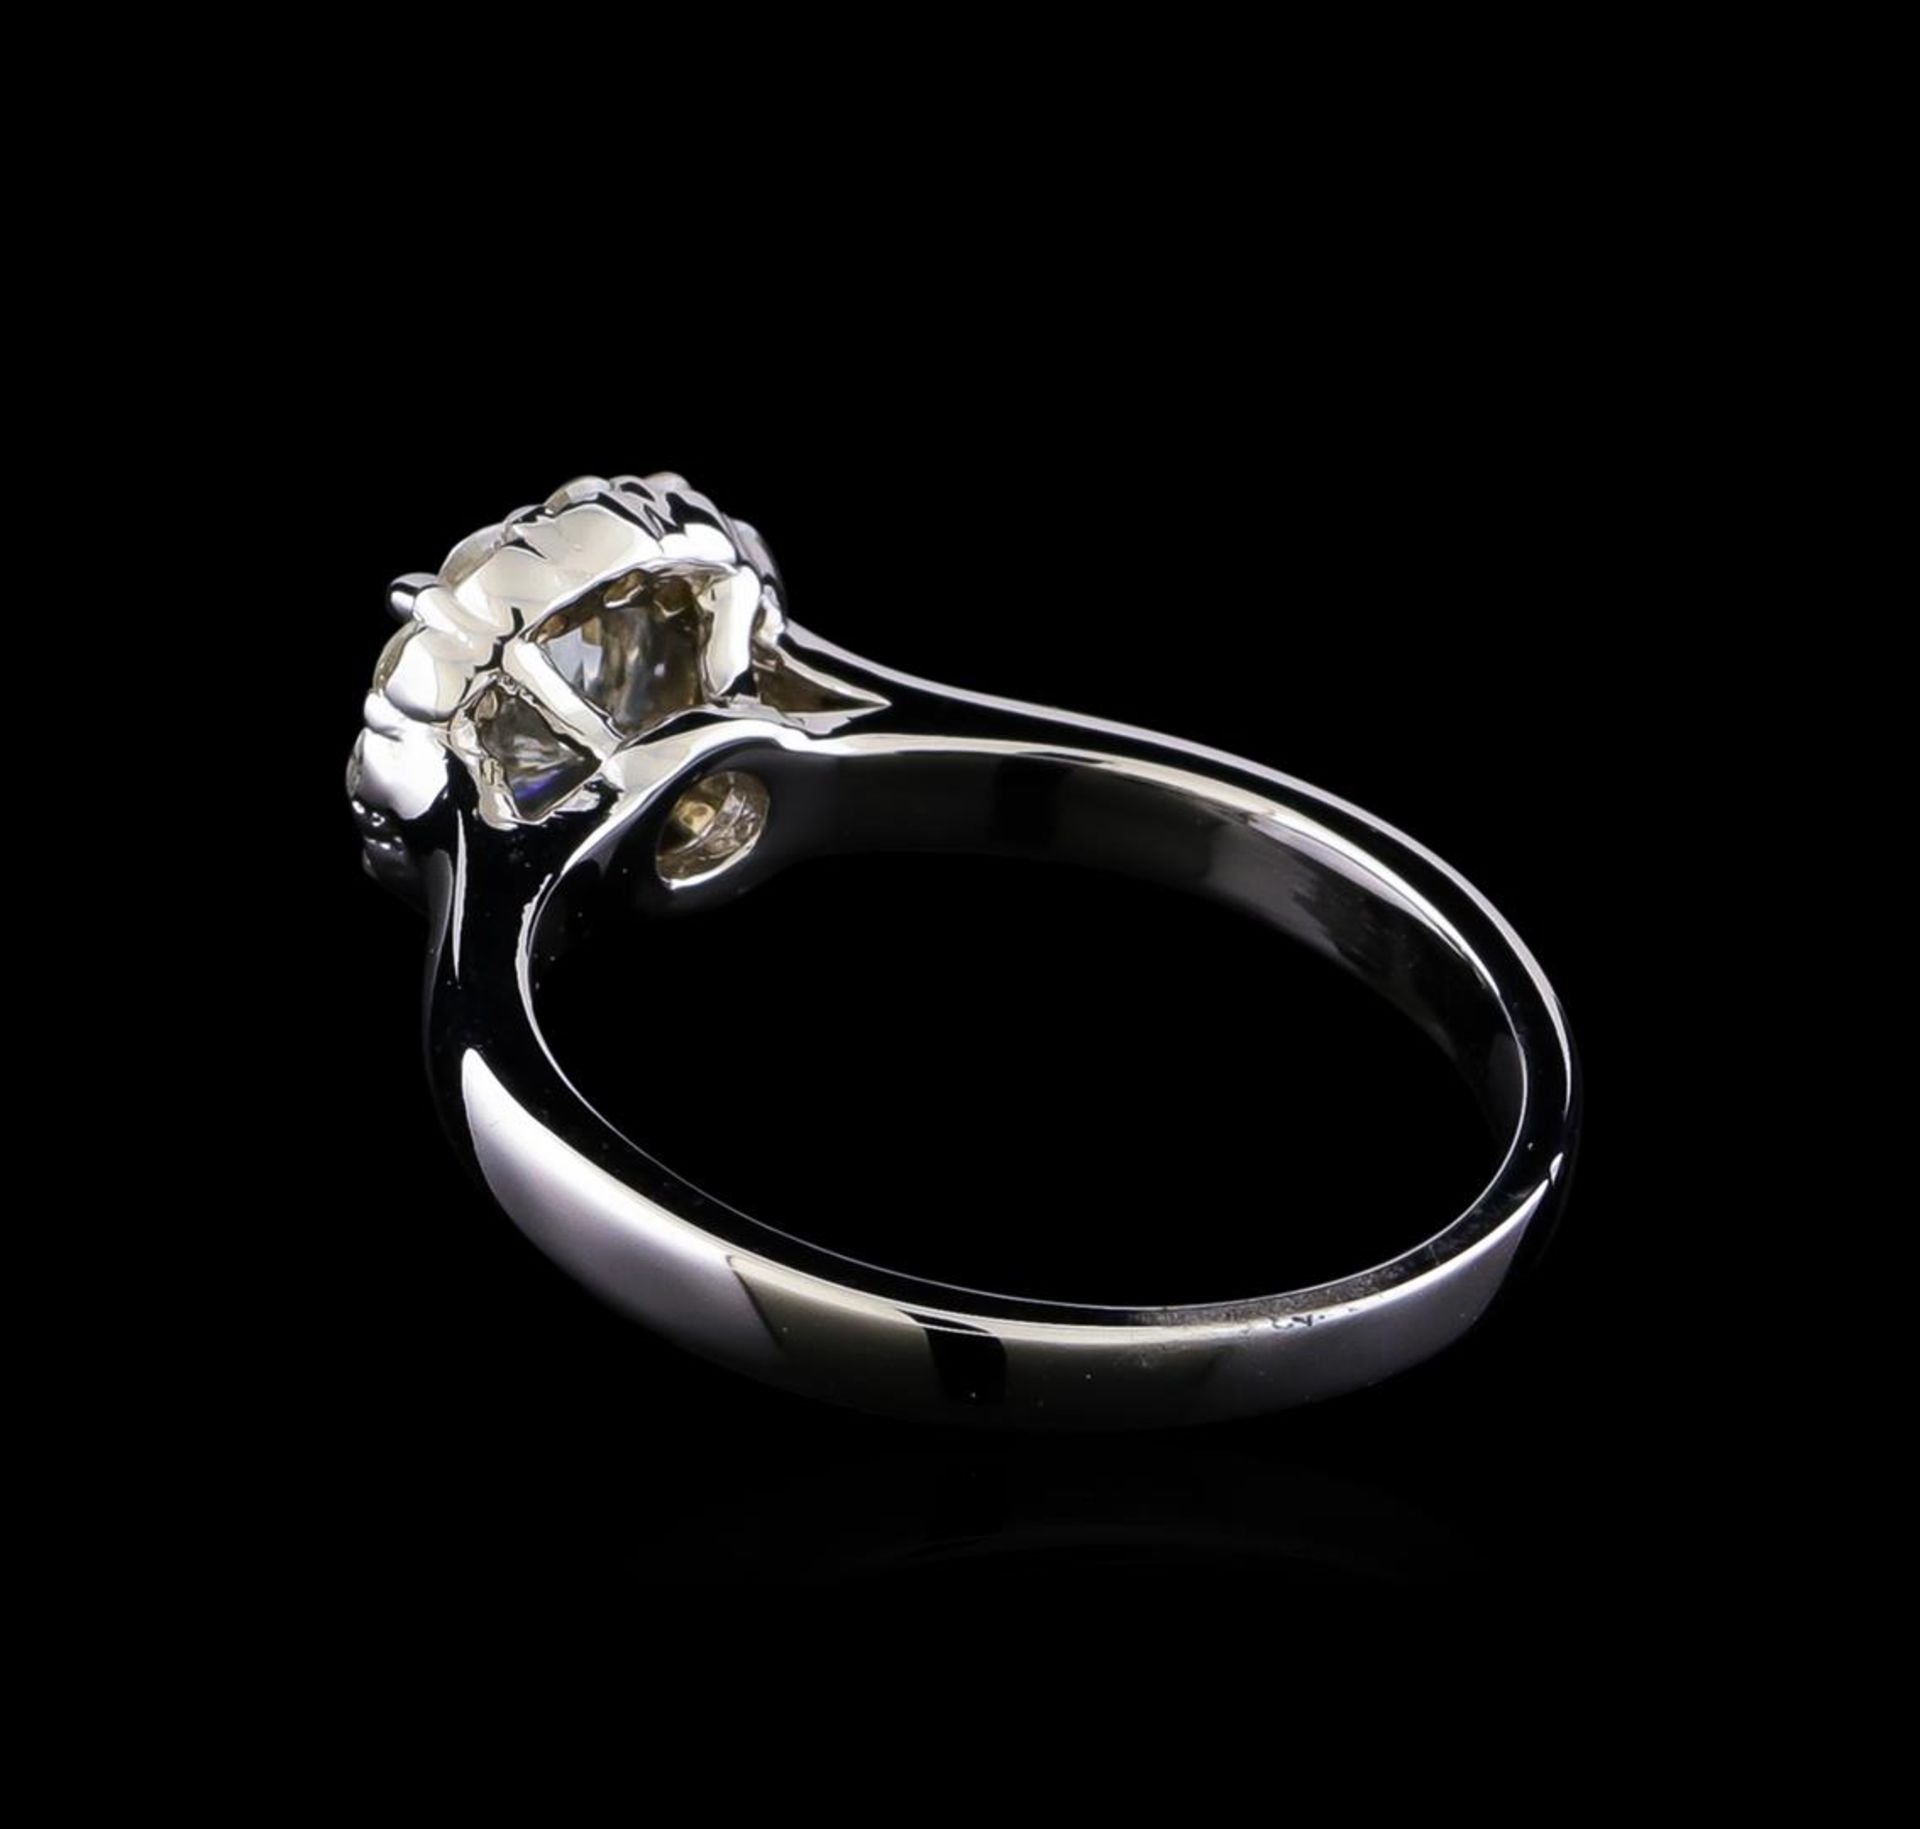 0.99 ctw Diamond Ring - 14KT White Gold - Image 3 of 5